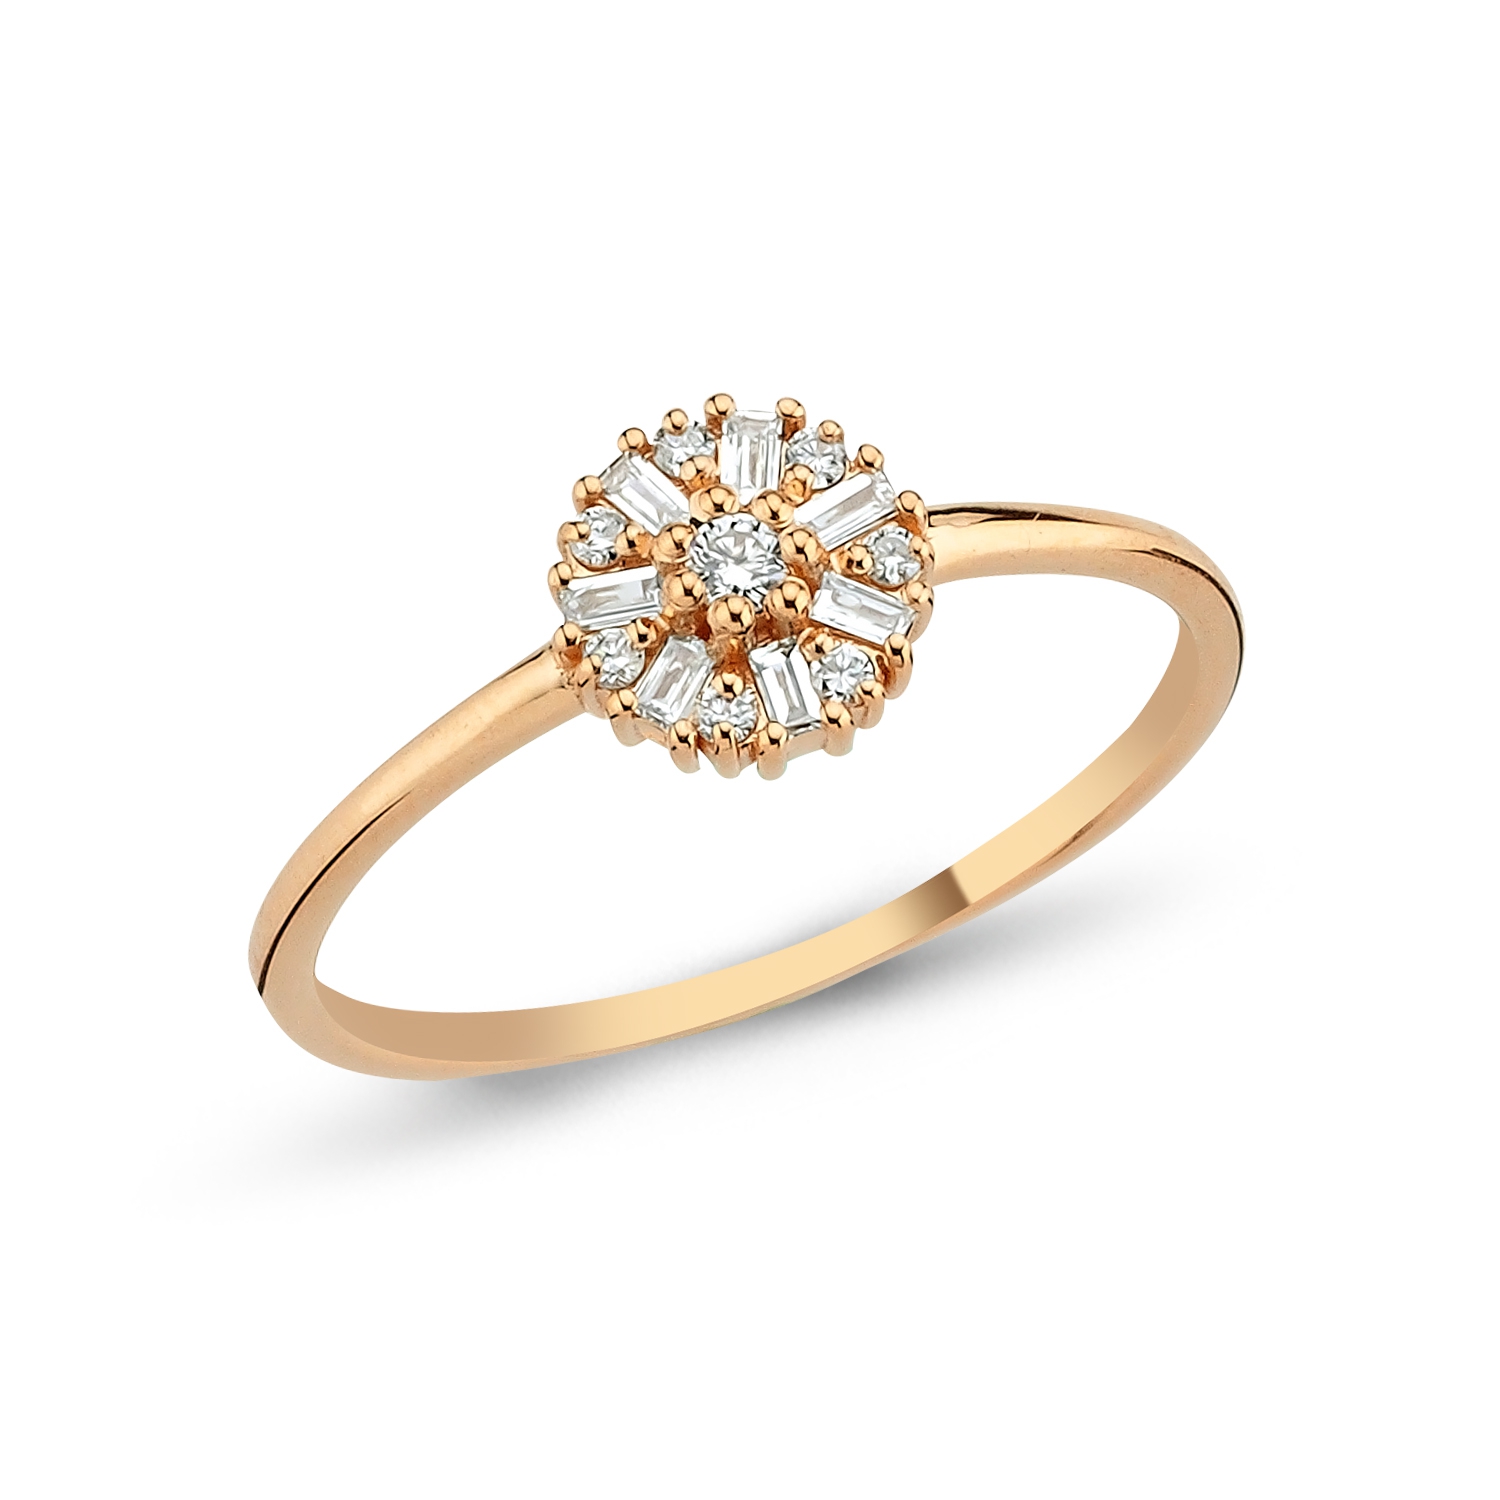 Diamond Ring / 14k Gold Diamond Chain Ring 0.10ct / Dainty Diamond  Solitaire Ring / Floating Diamond / Minimalist Diamond Ring / Daily Ring